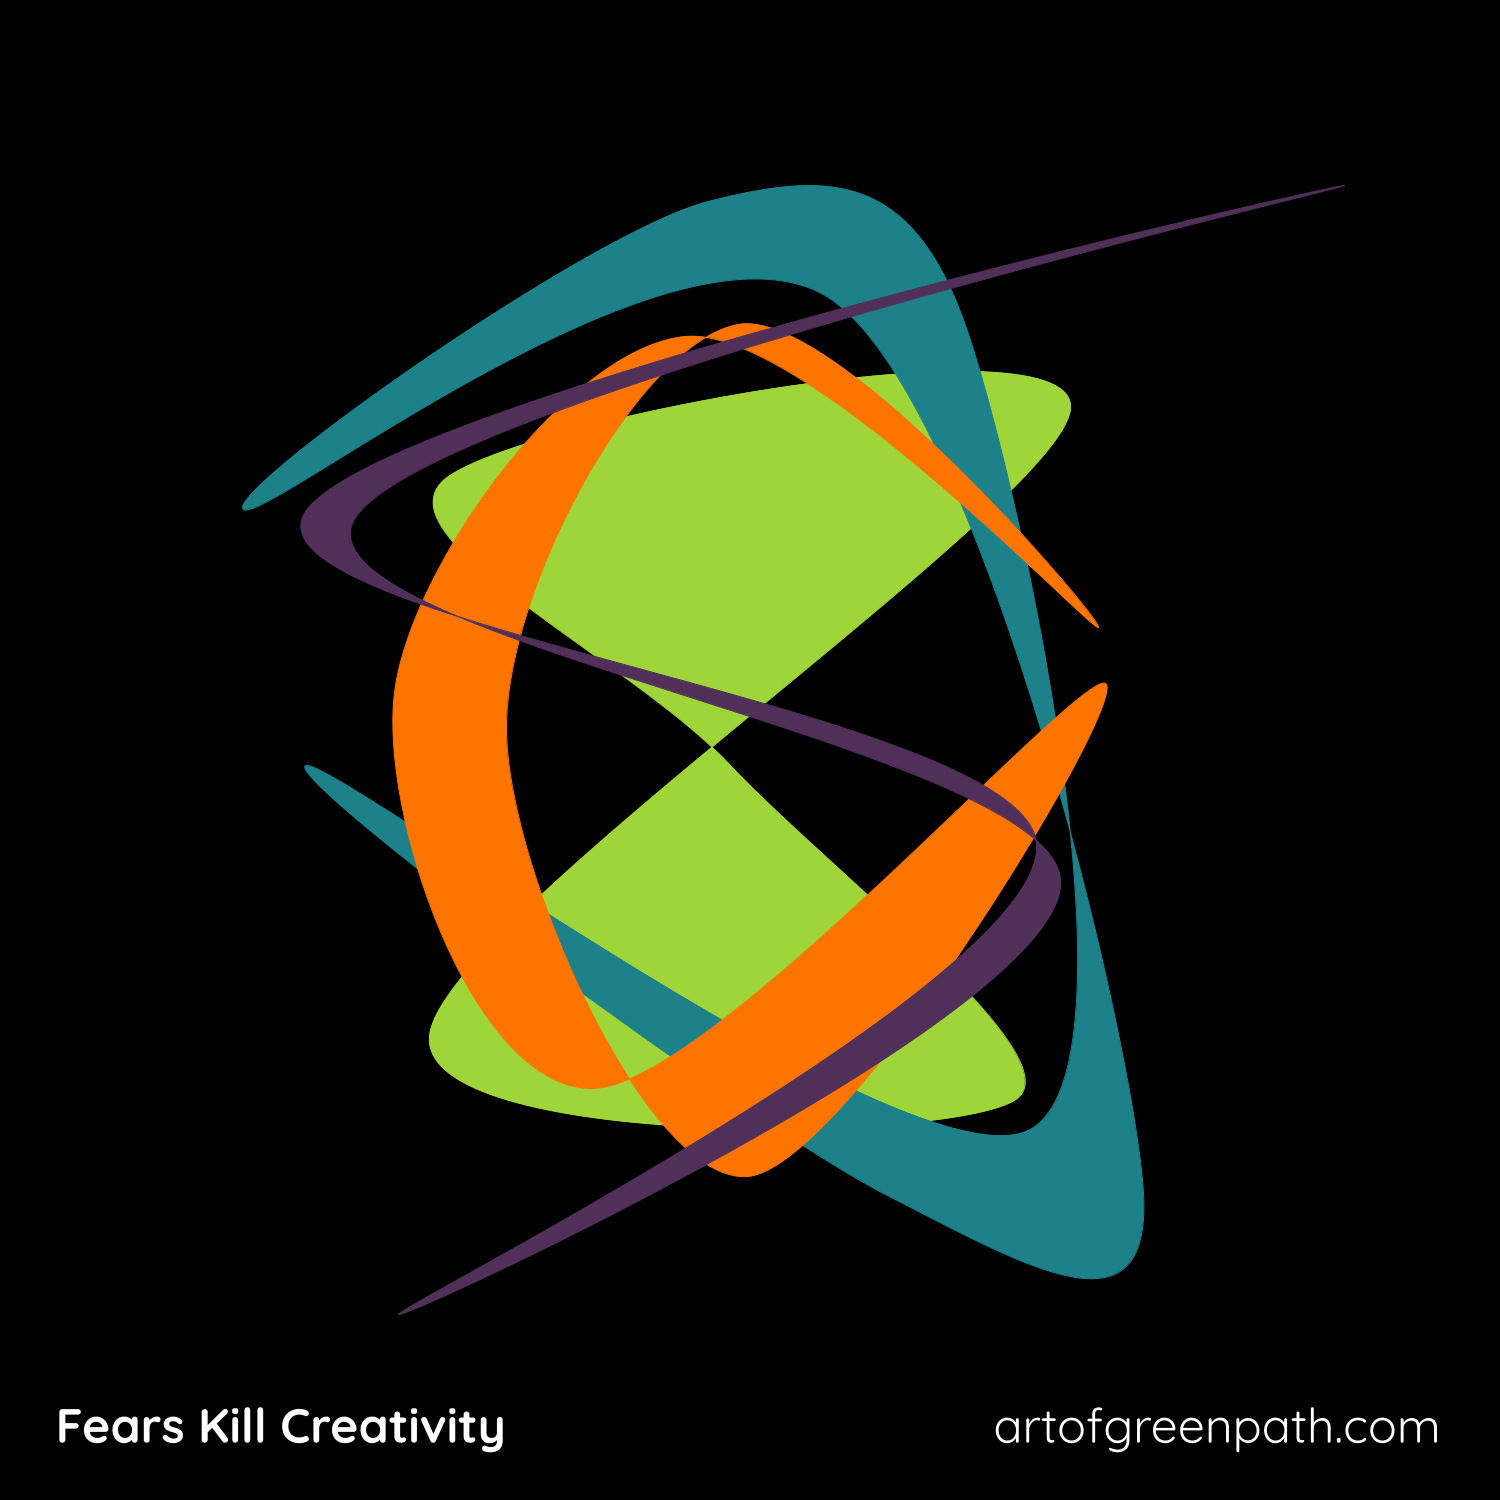 Art Of Green Path - Fears Kill Creativity